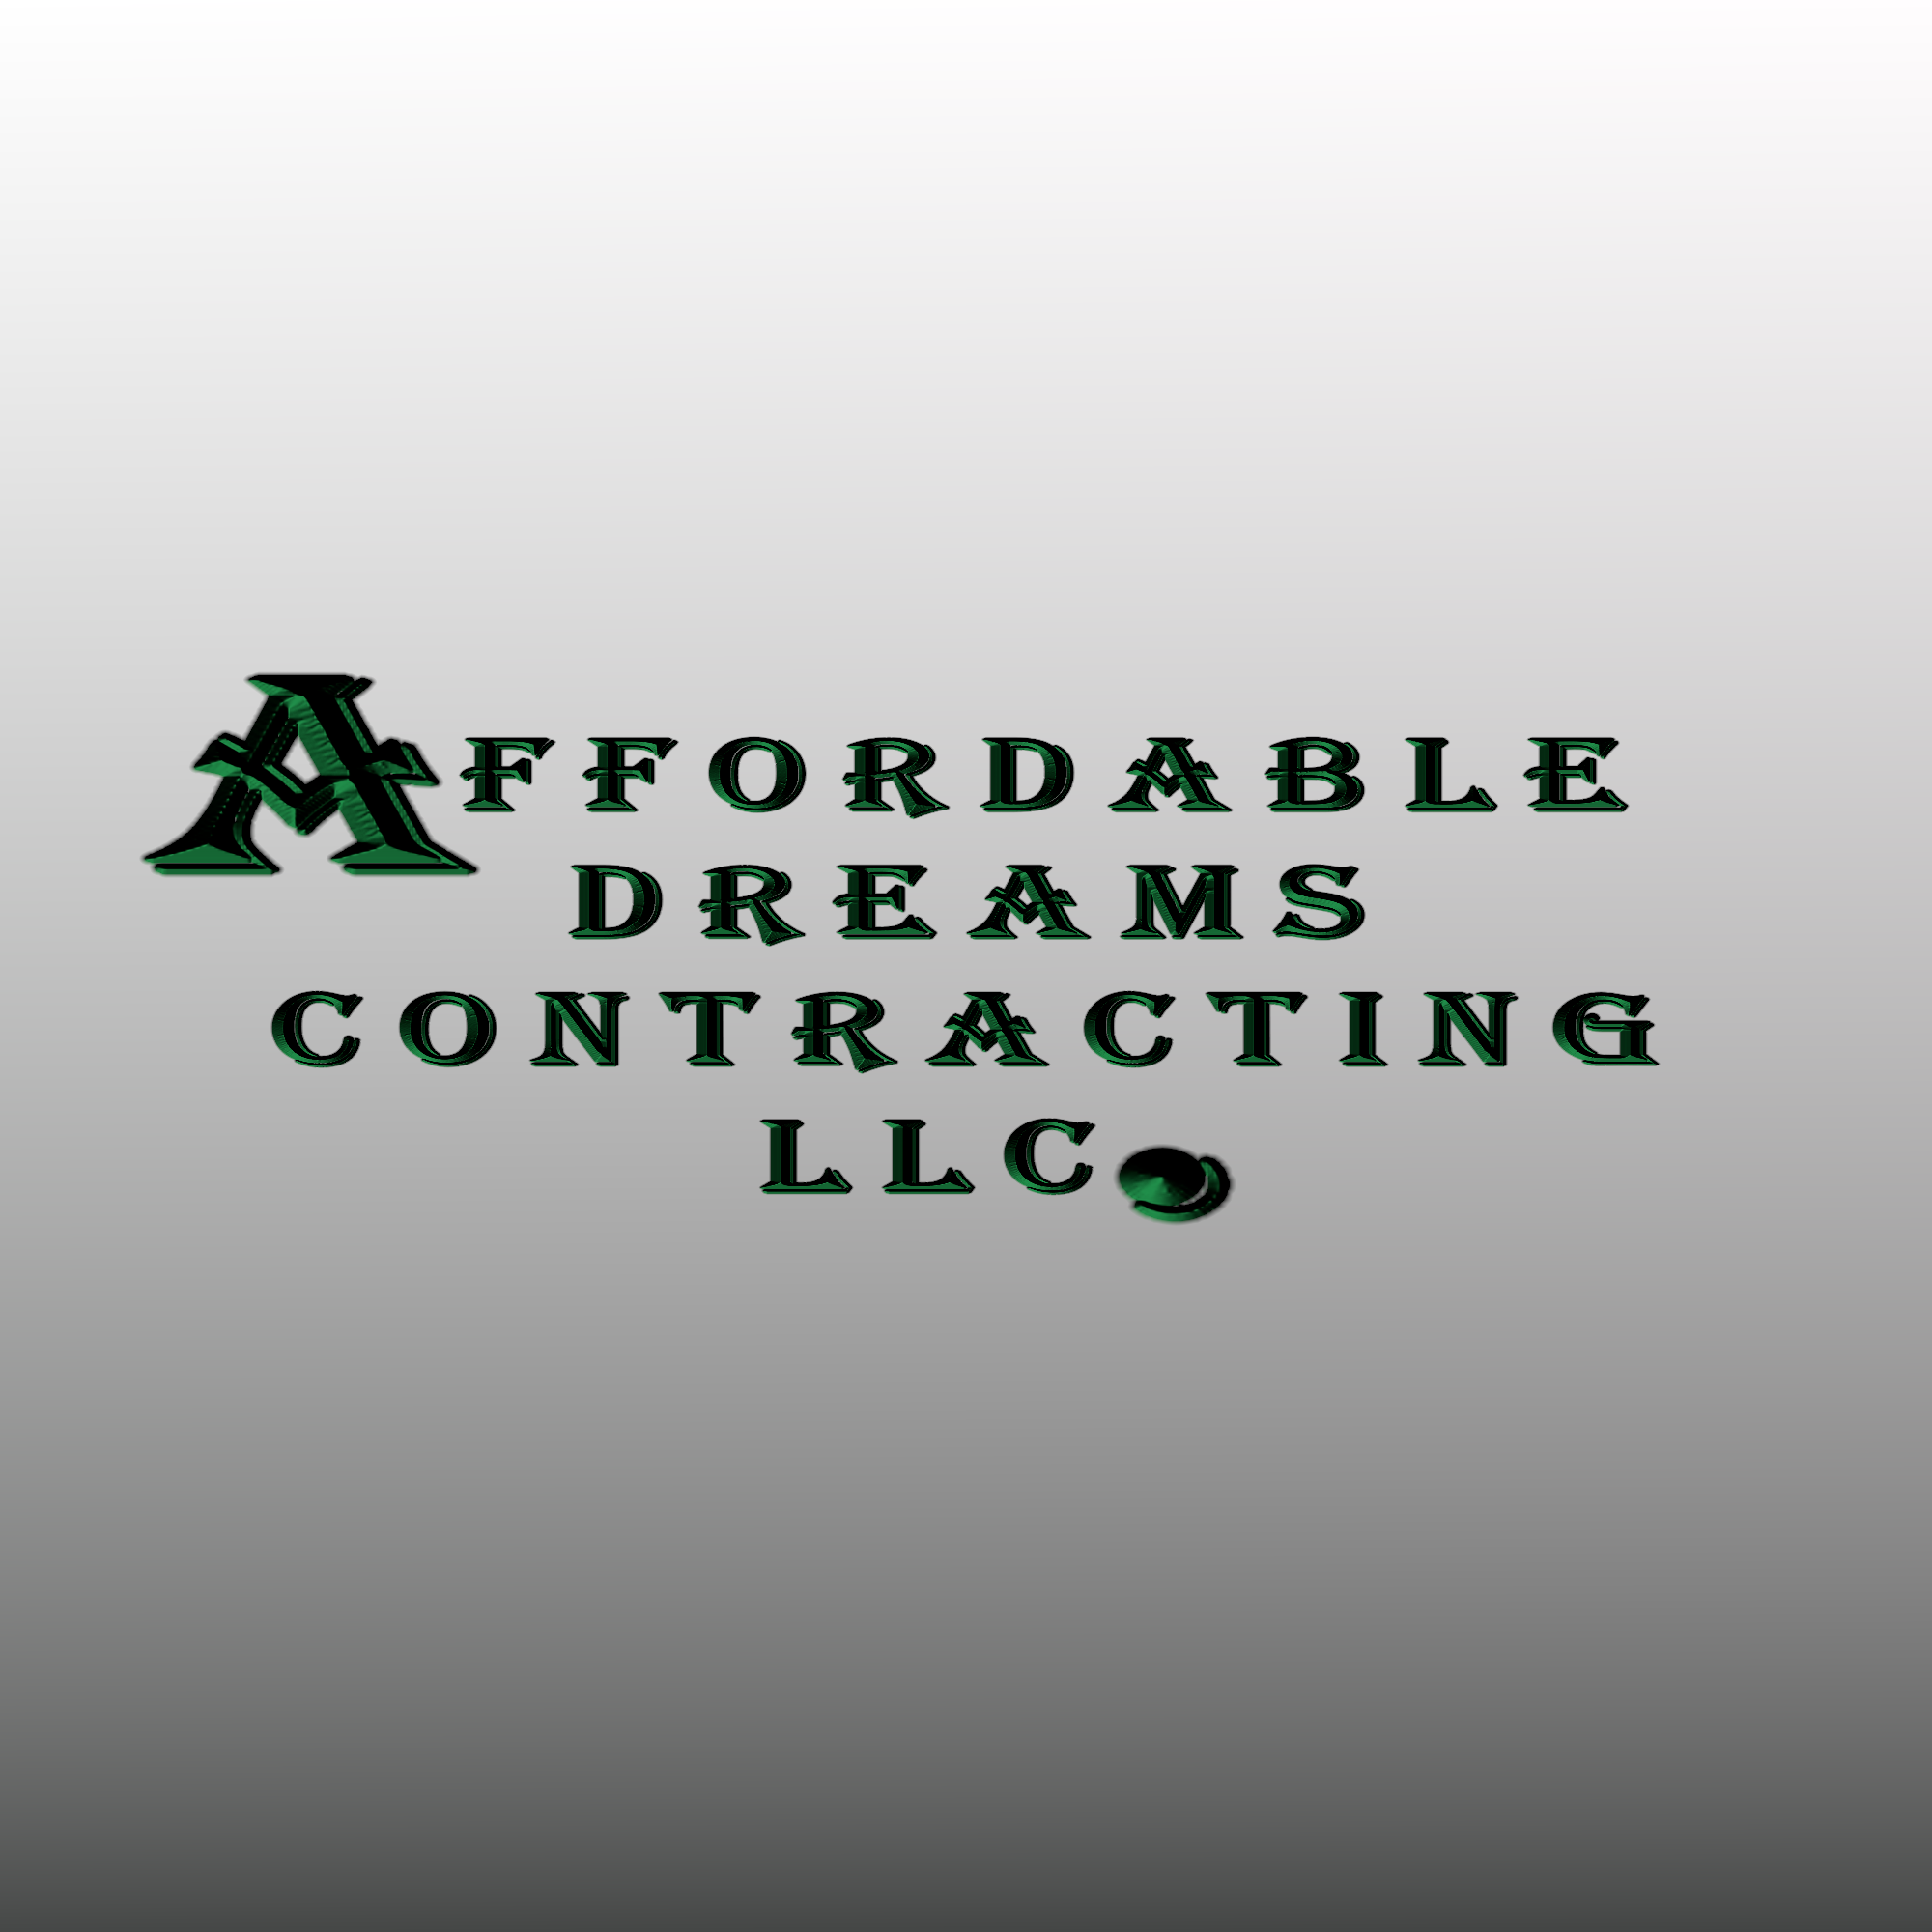 AFFORDABLE DREAMS CONTRACTING LLC Logo